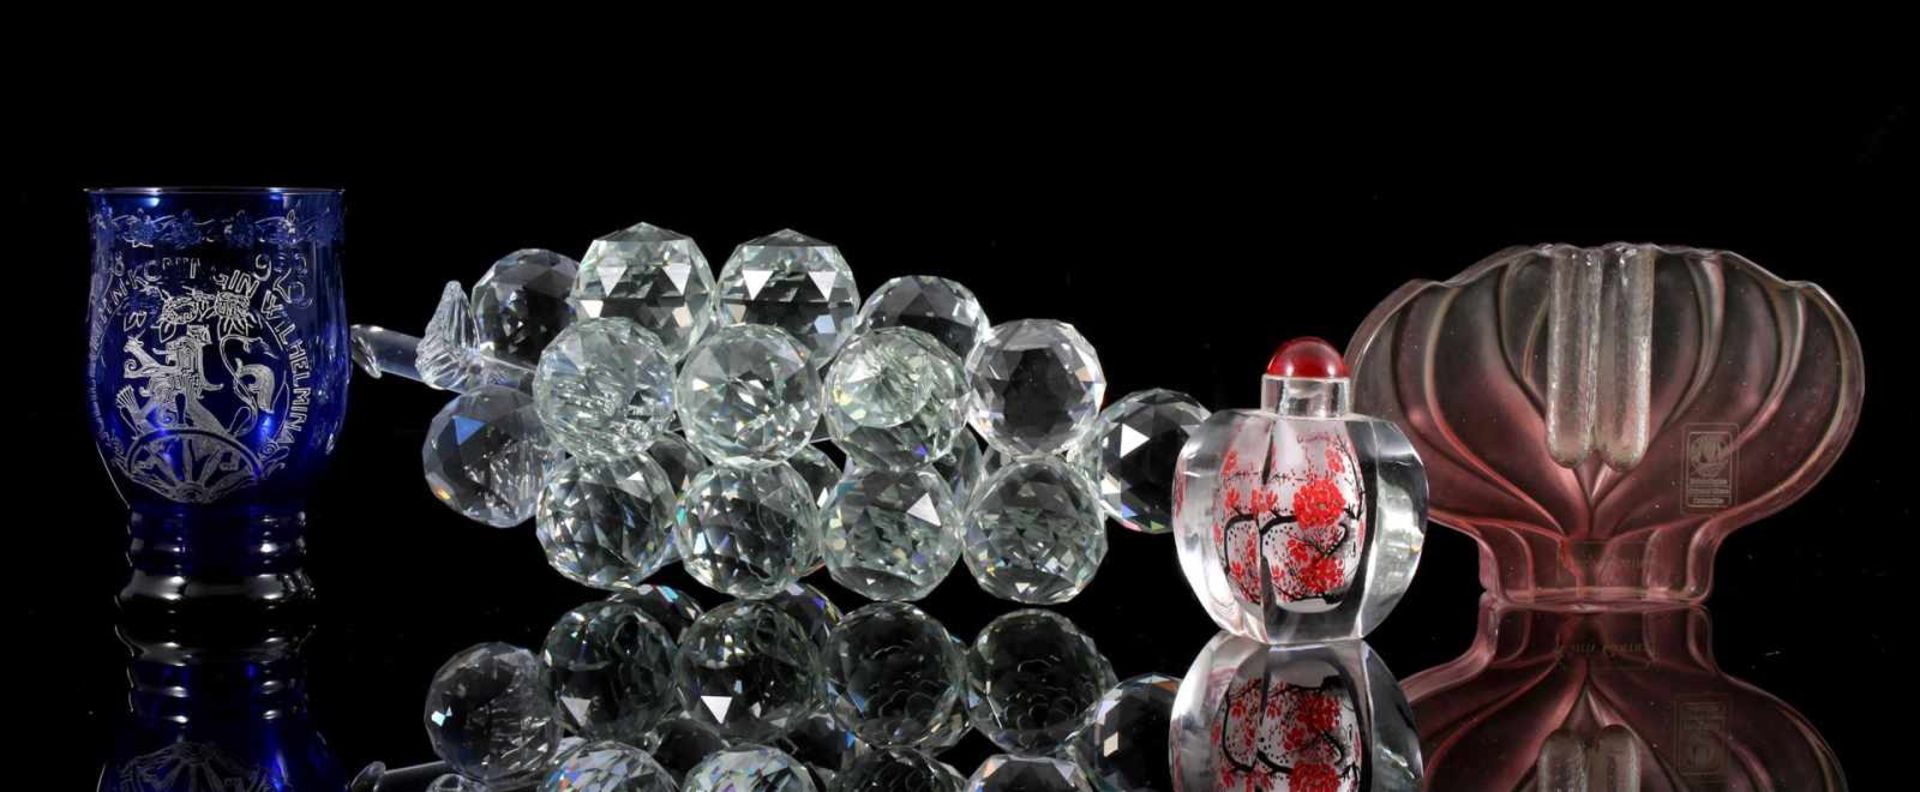 Kristallen druiventros 26 cm lang, Walther kristallen bloemenvaasje 10 cm hoog, 14,5 cm breed,